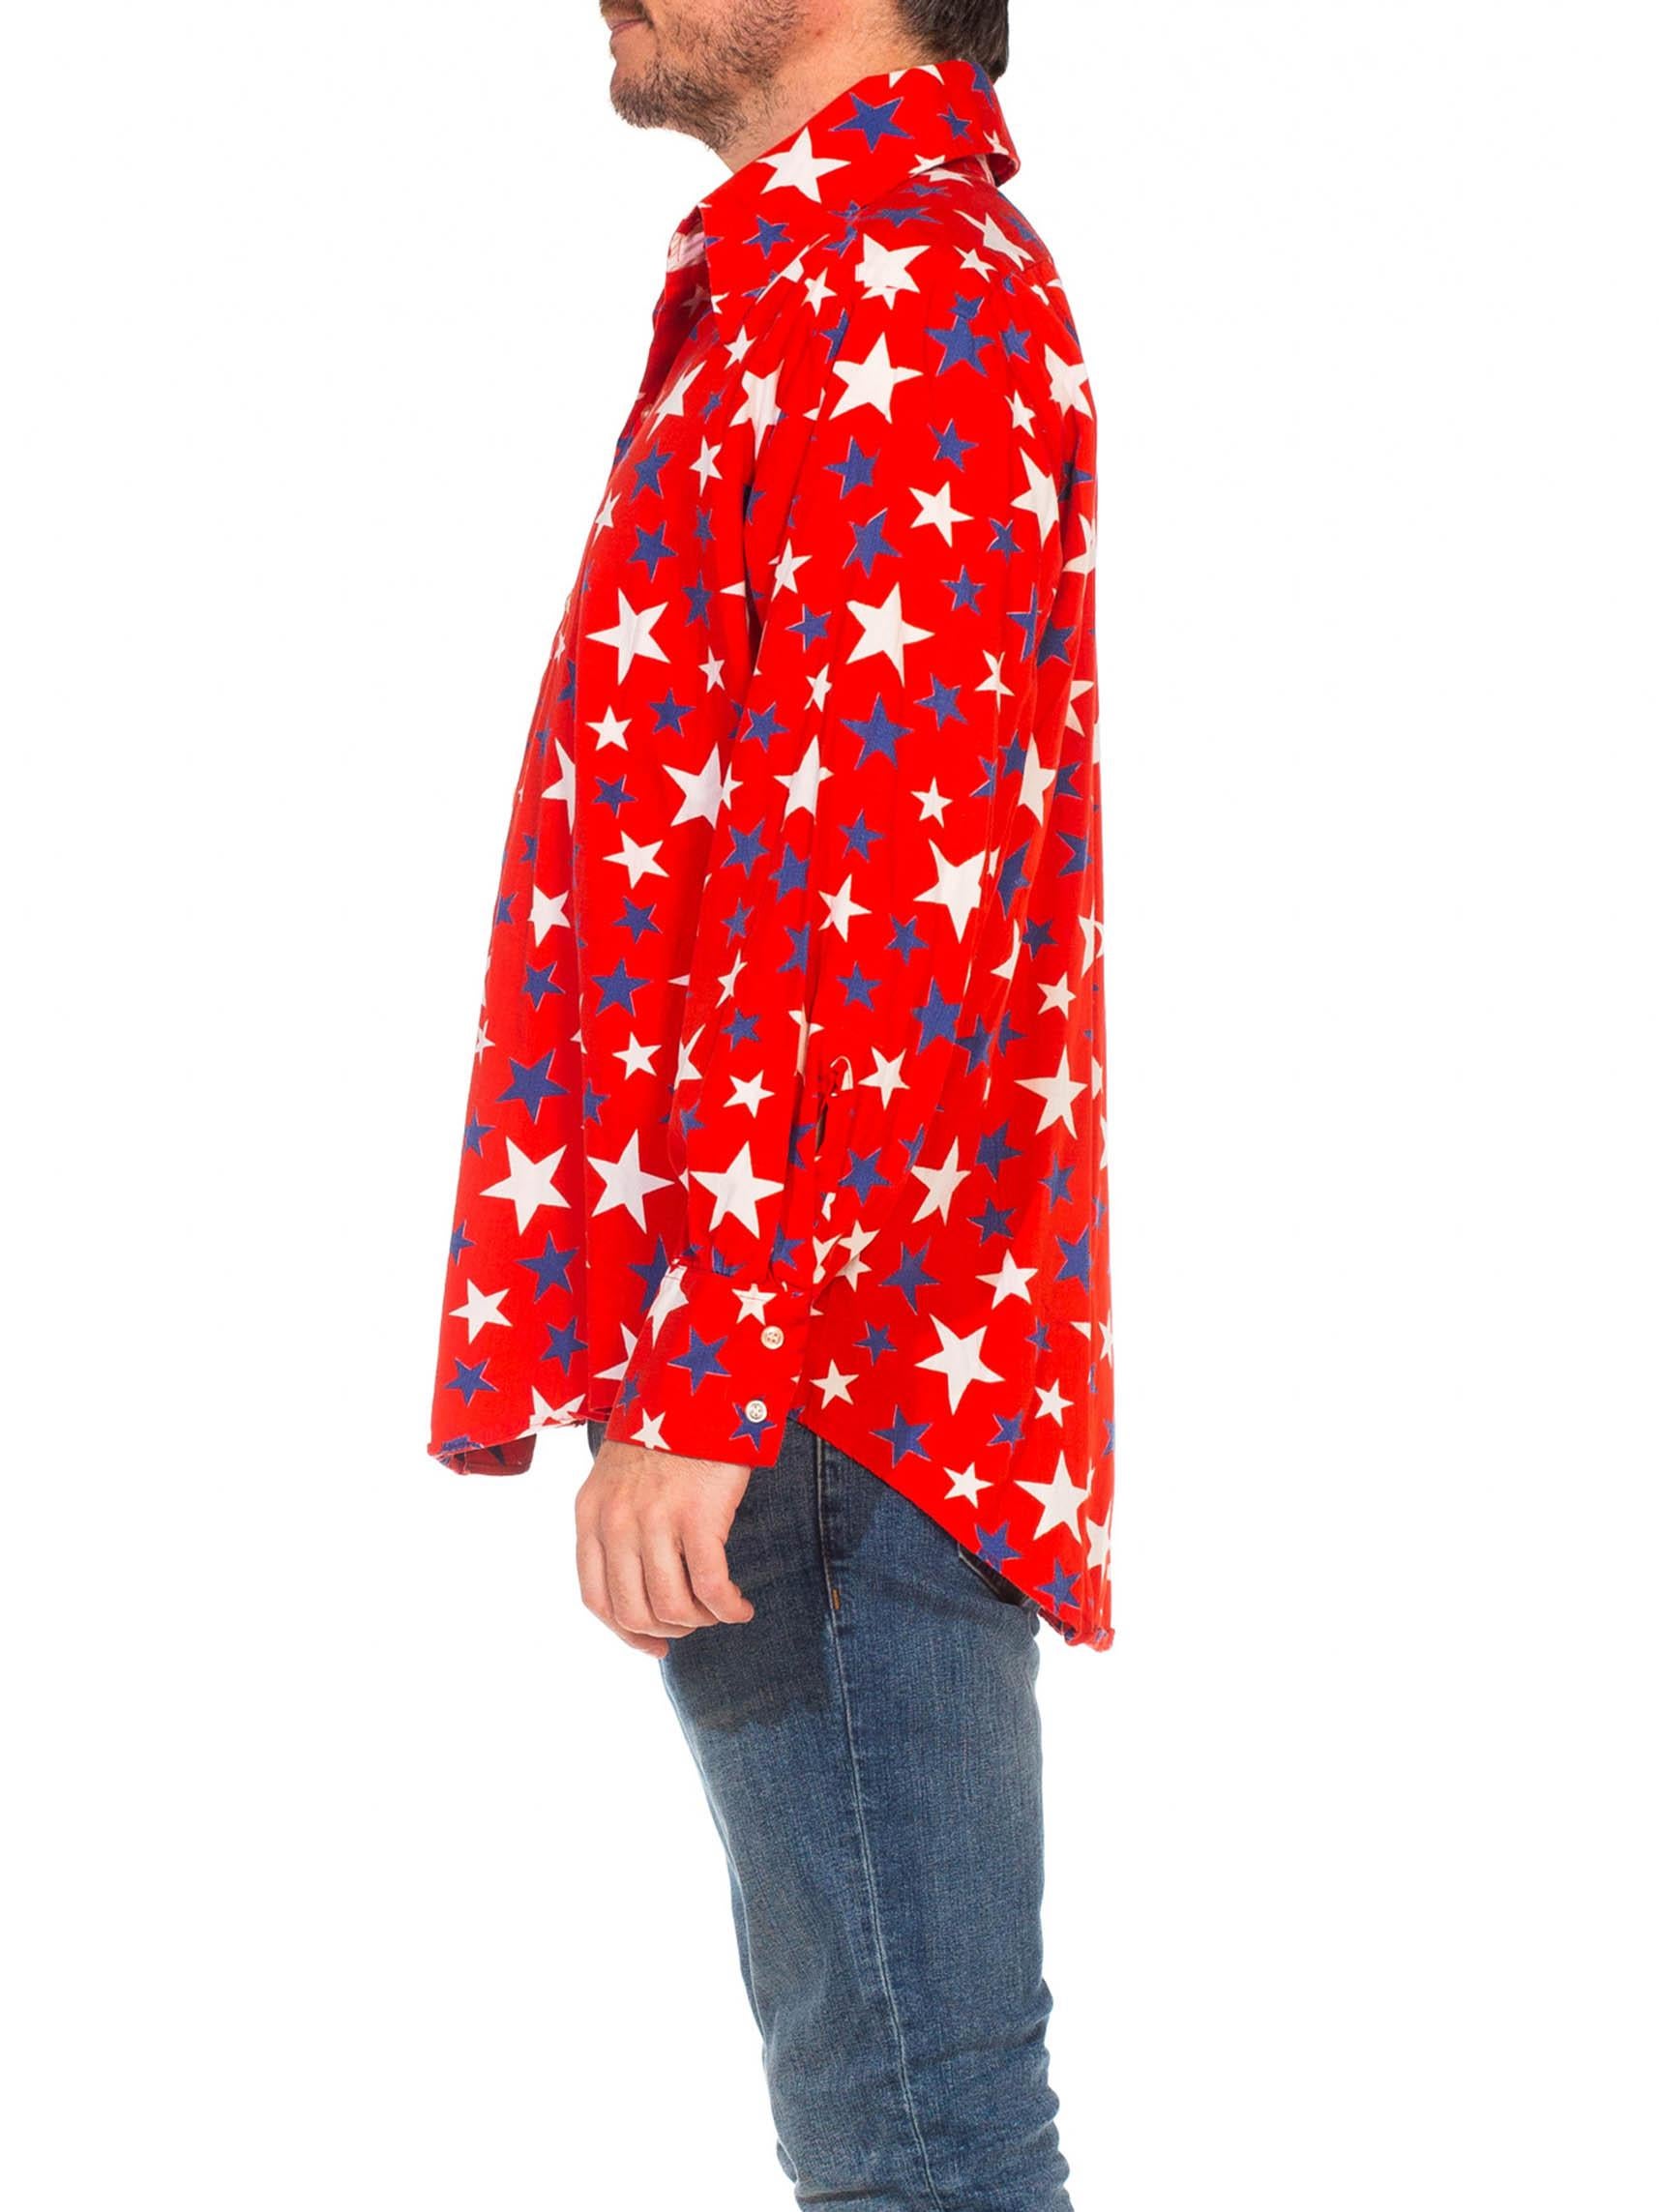 long sleeve shirt with stars